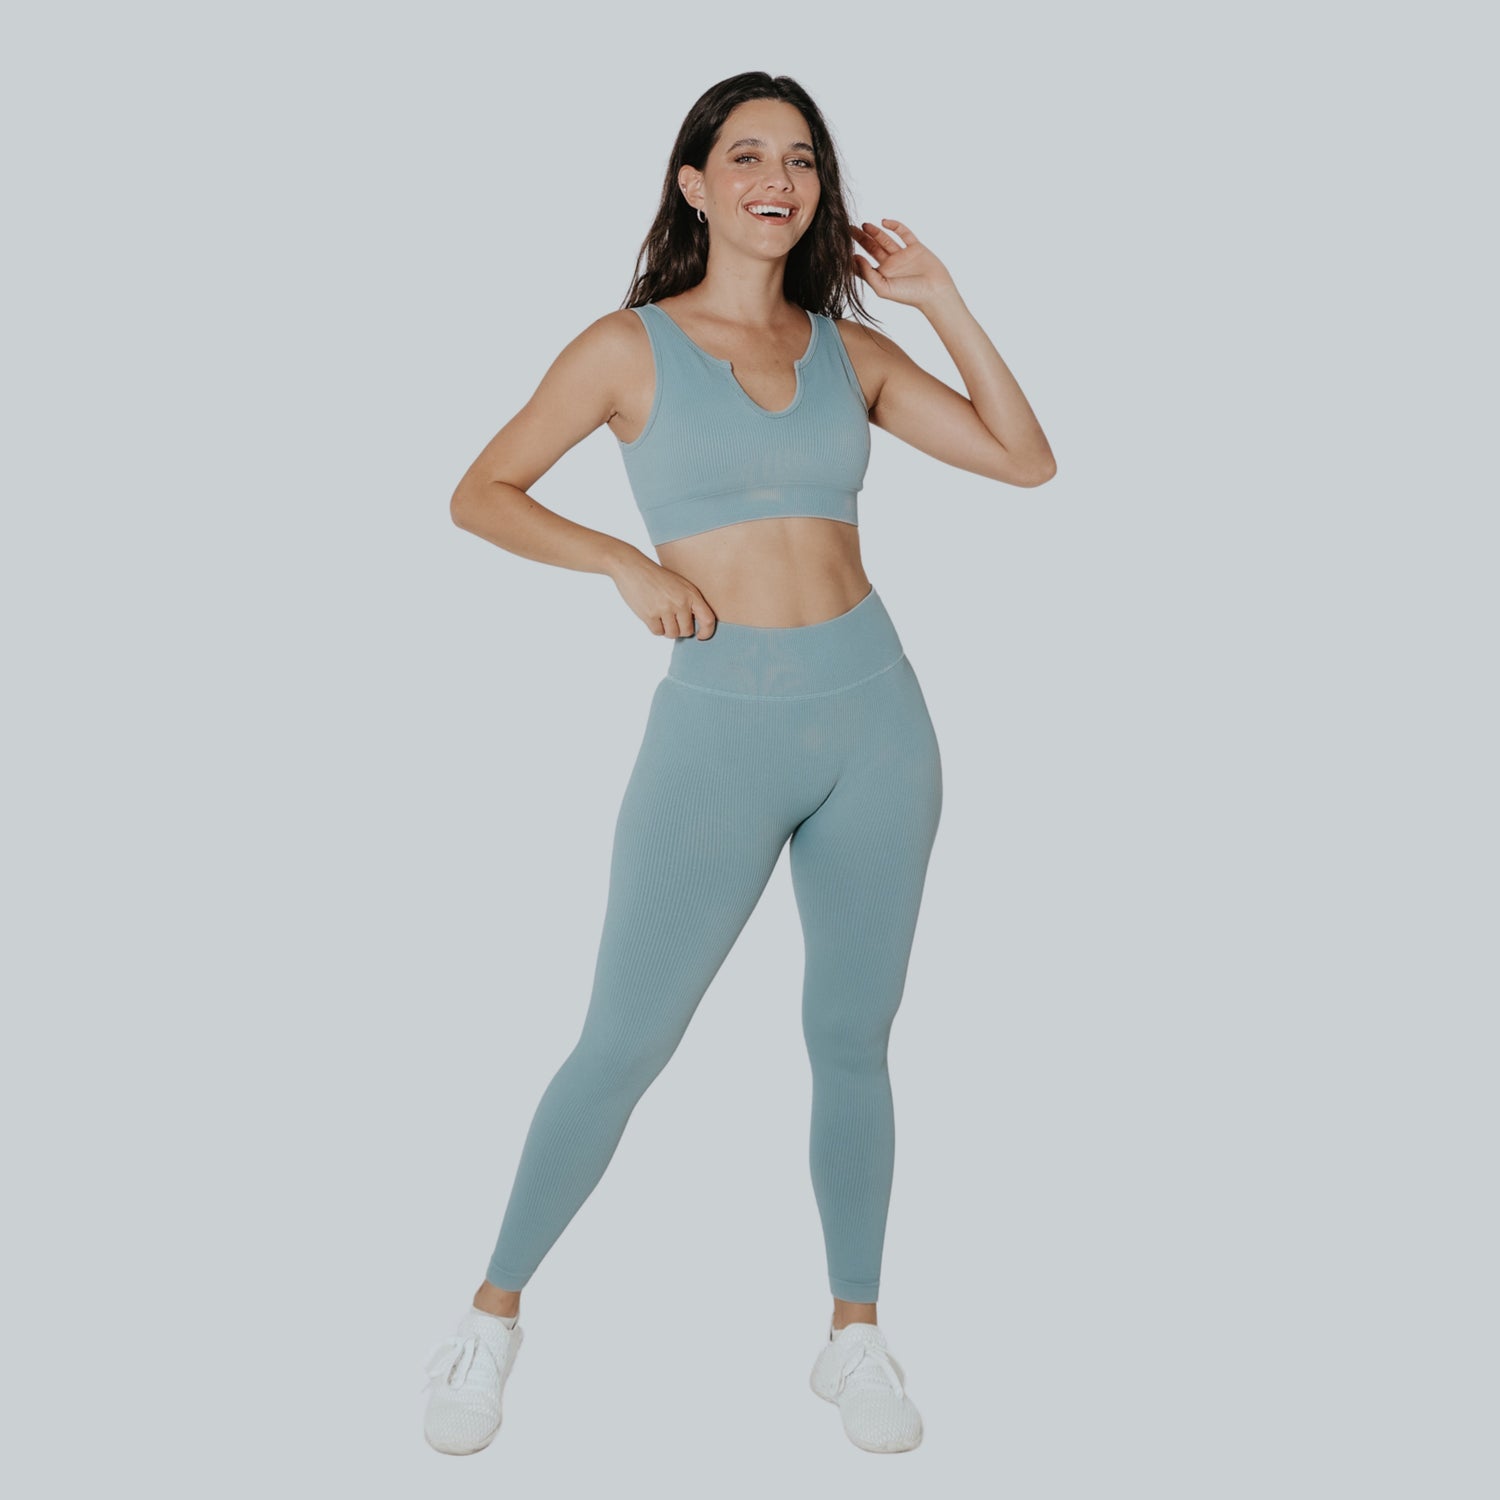 Women’s 2-Piece Activewear Sets